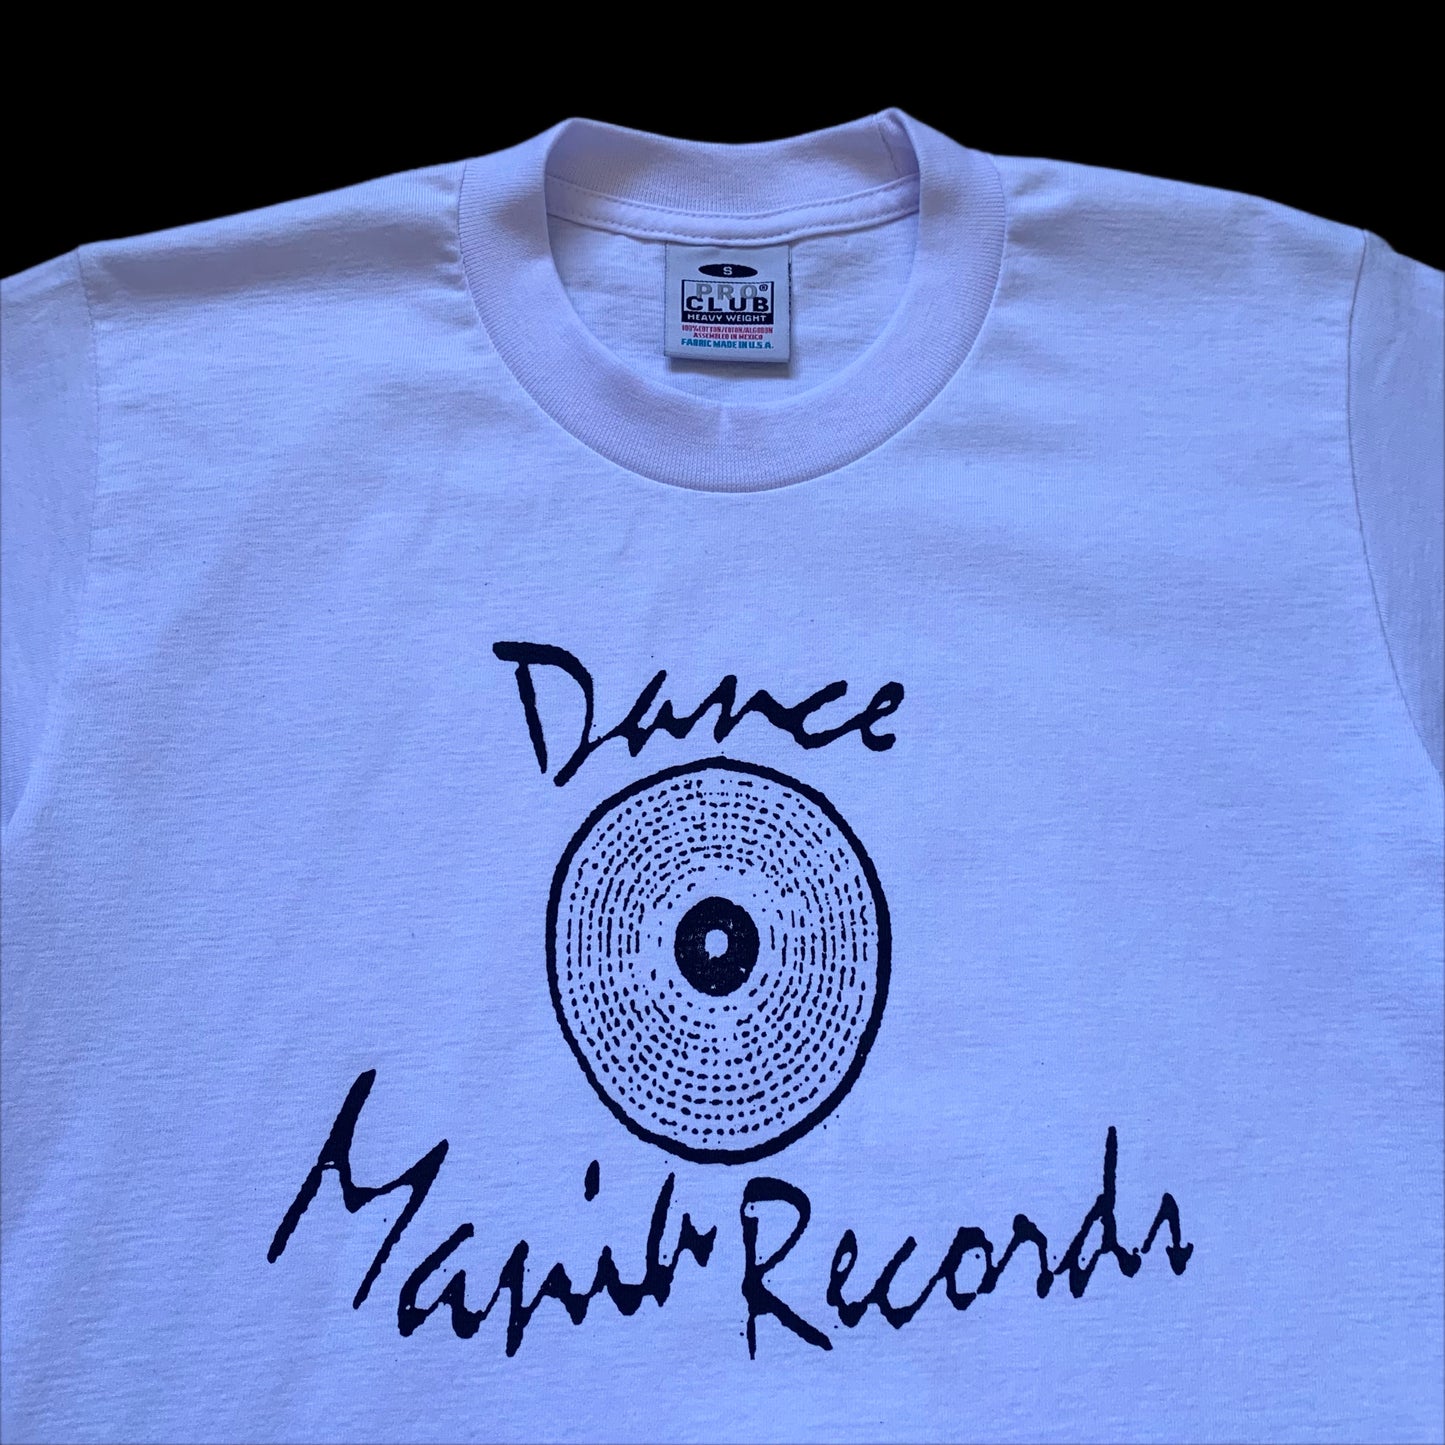 dance mania records tee